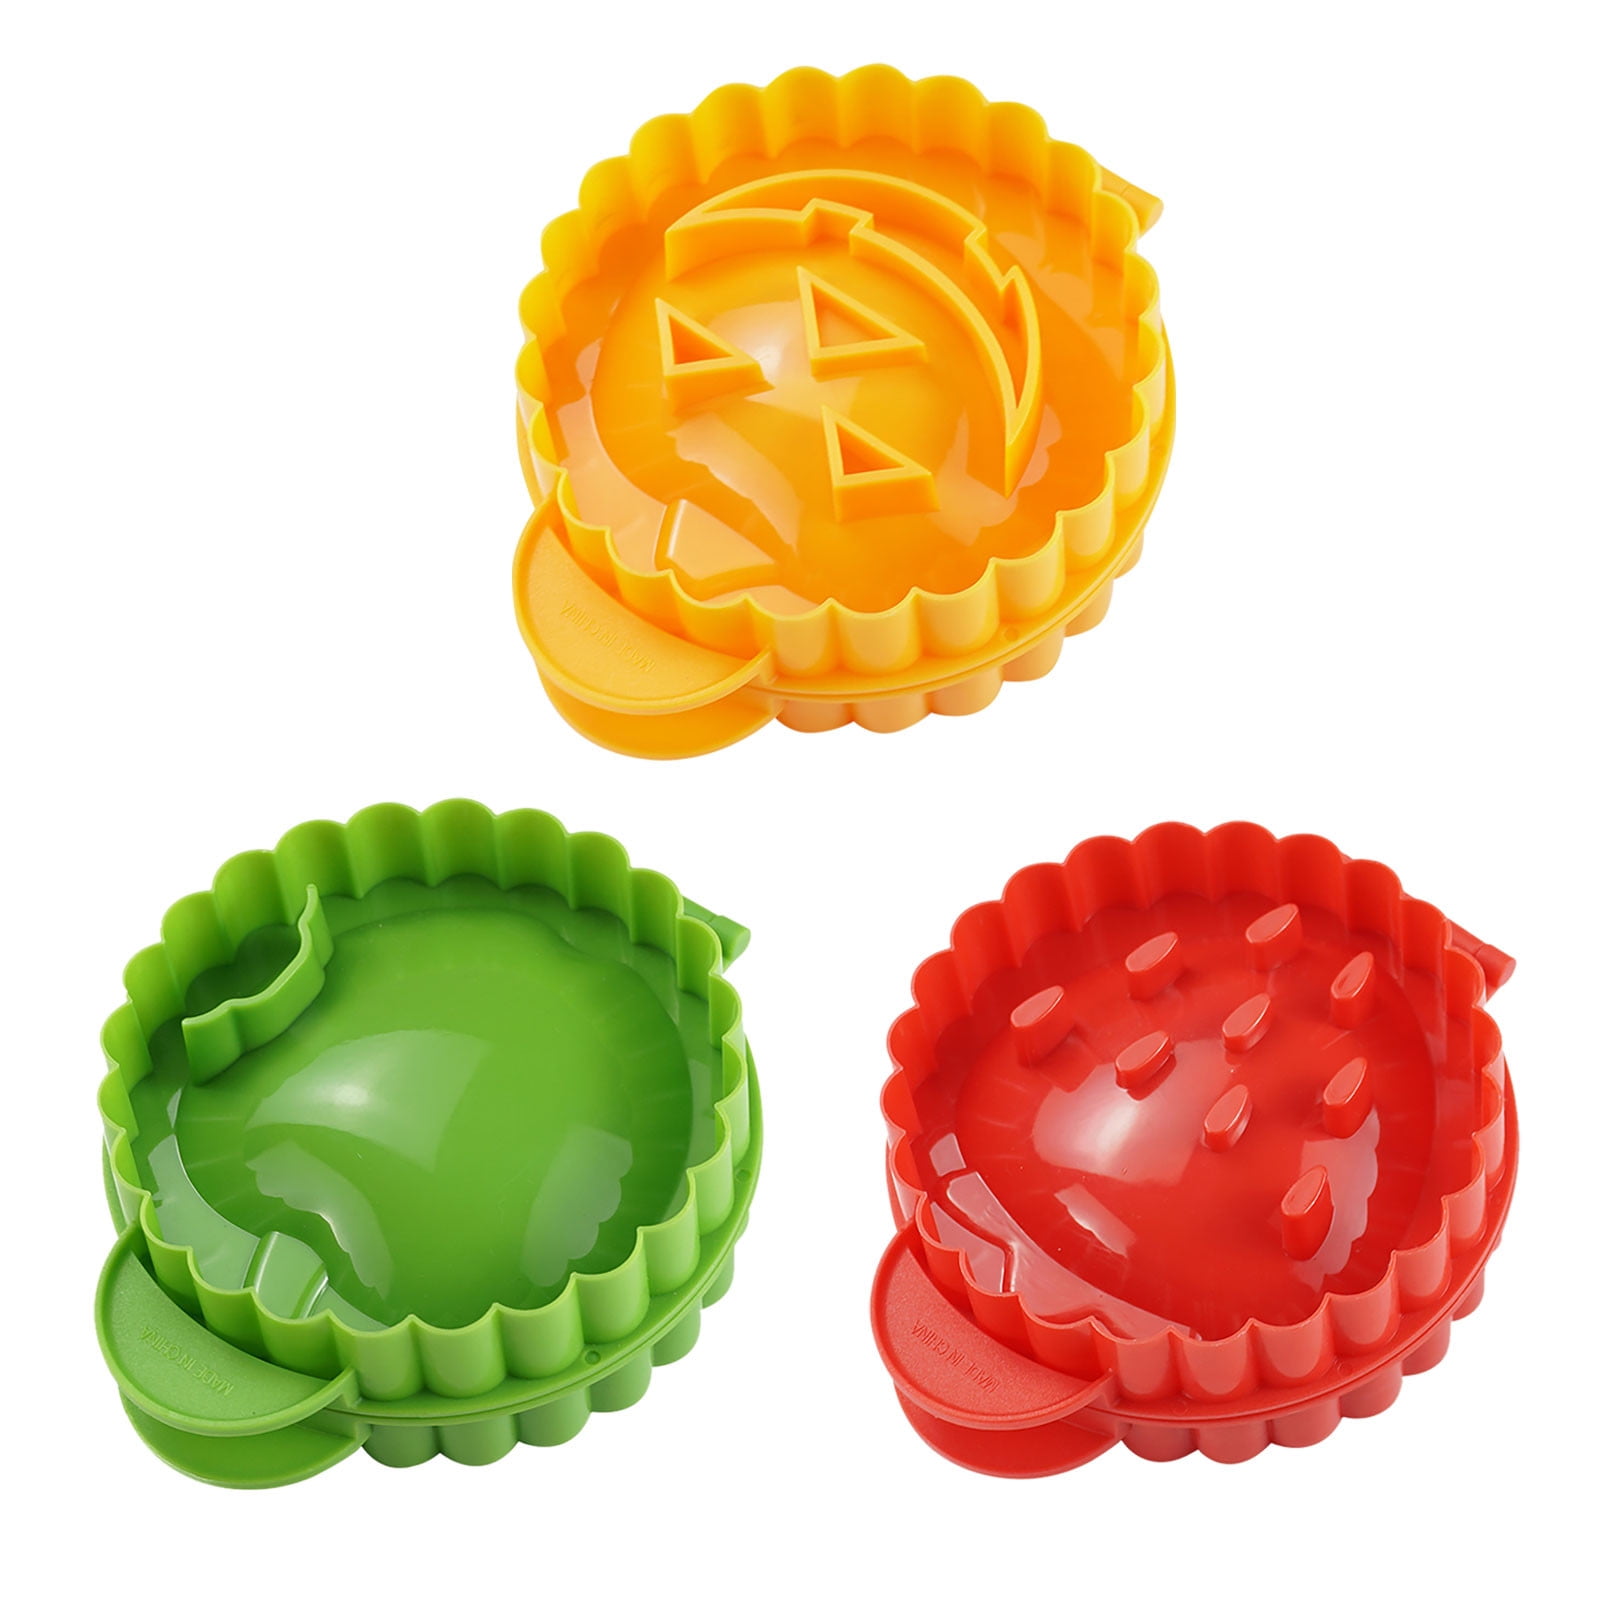 WatermelonBaby 3 Pack Mini Hand Pie Molds, Mini Pie Molds, Mini Pie Maker, Hand Pie Maker, One Press Pie Set, Dough Press, Pocket Pie Molds